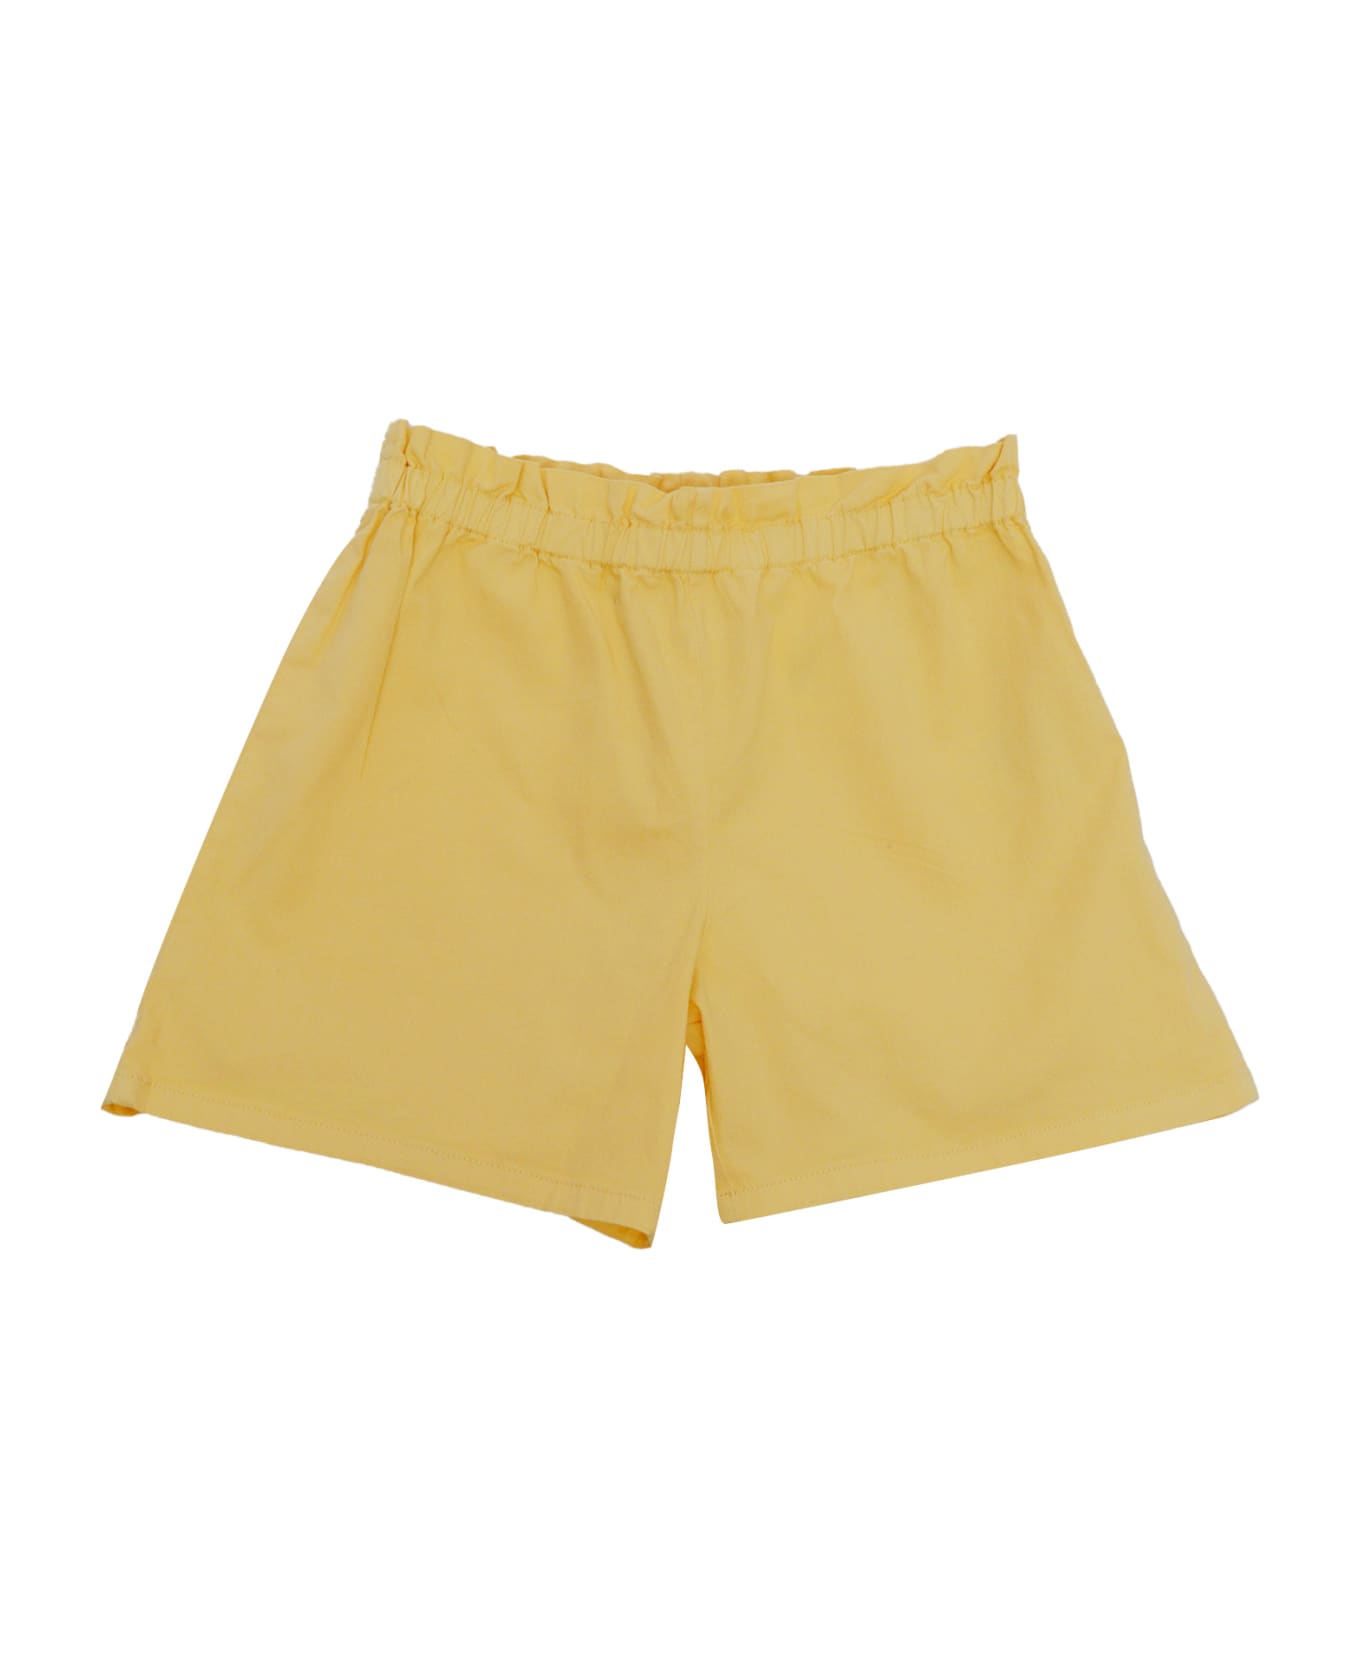 Bonpoint Milly Yellow Shorts - YELLOW